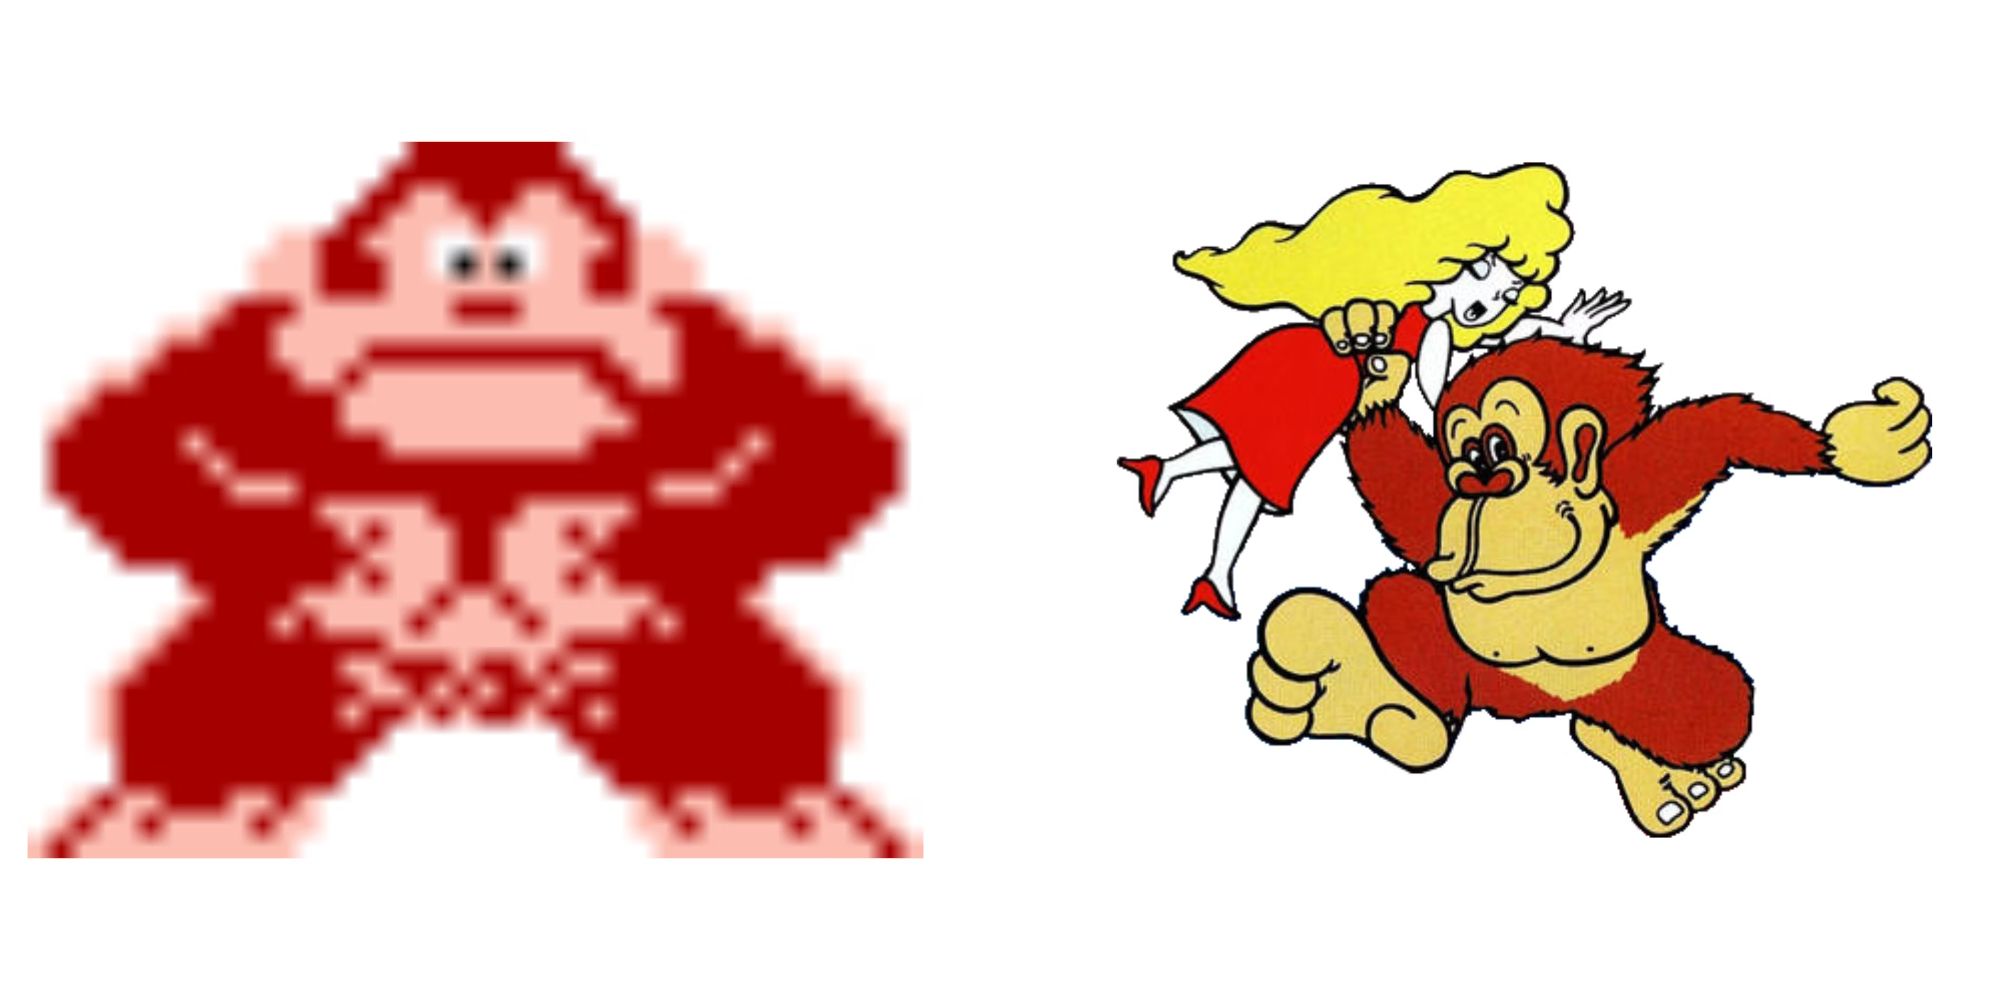 Pixel art Donkey Kong and Donkey Kong original drawings